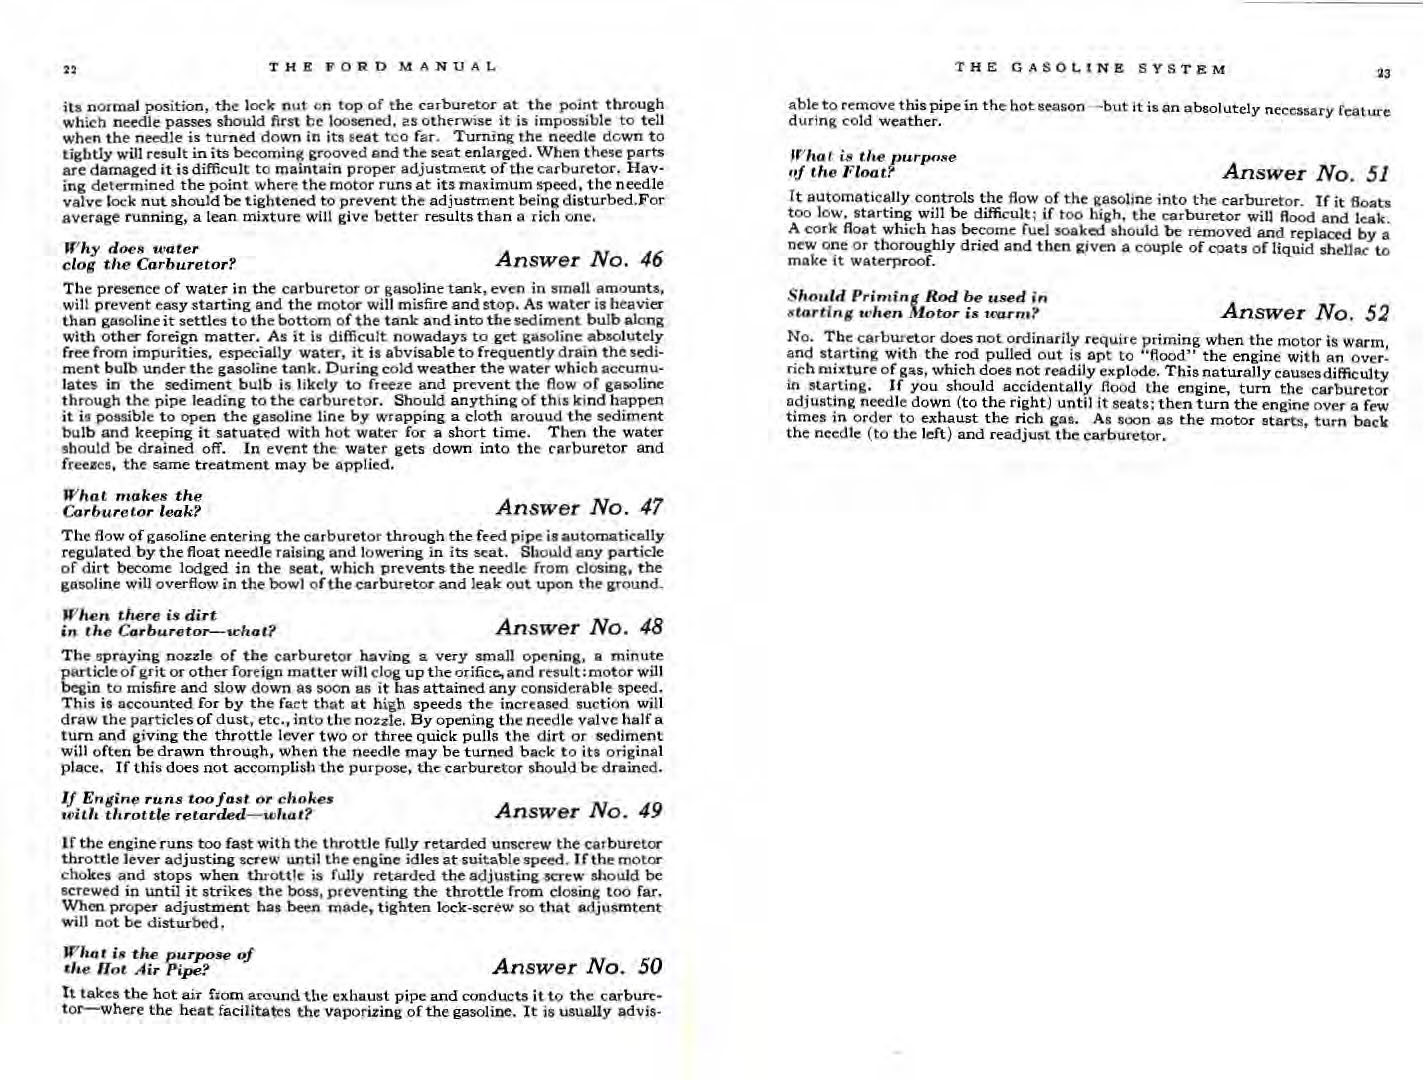 n_1922 Ford Manual-22-23.jpg